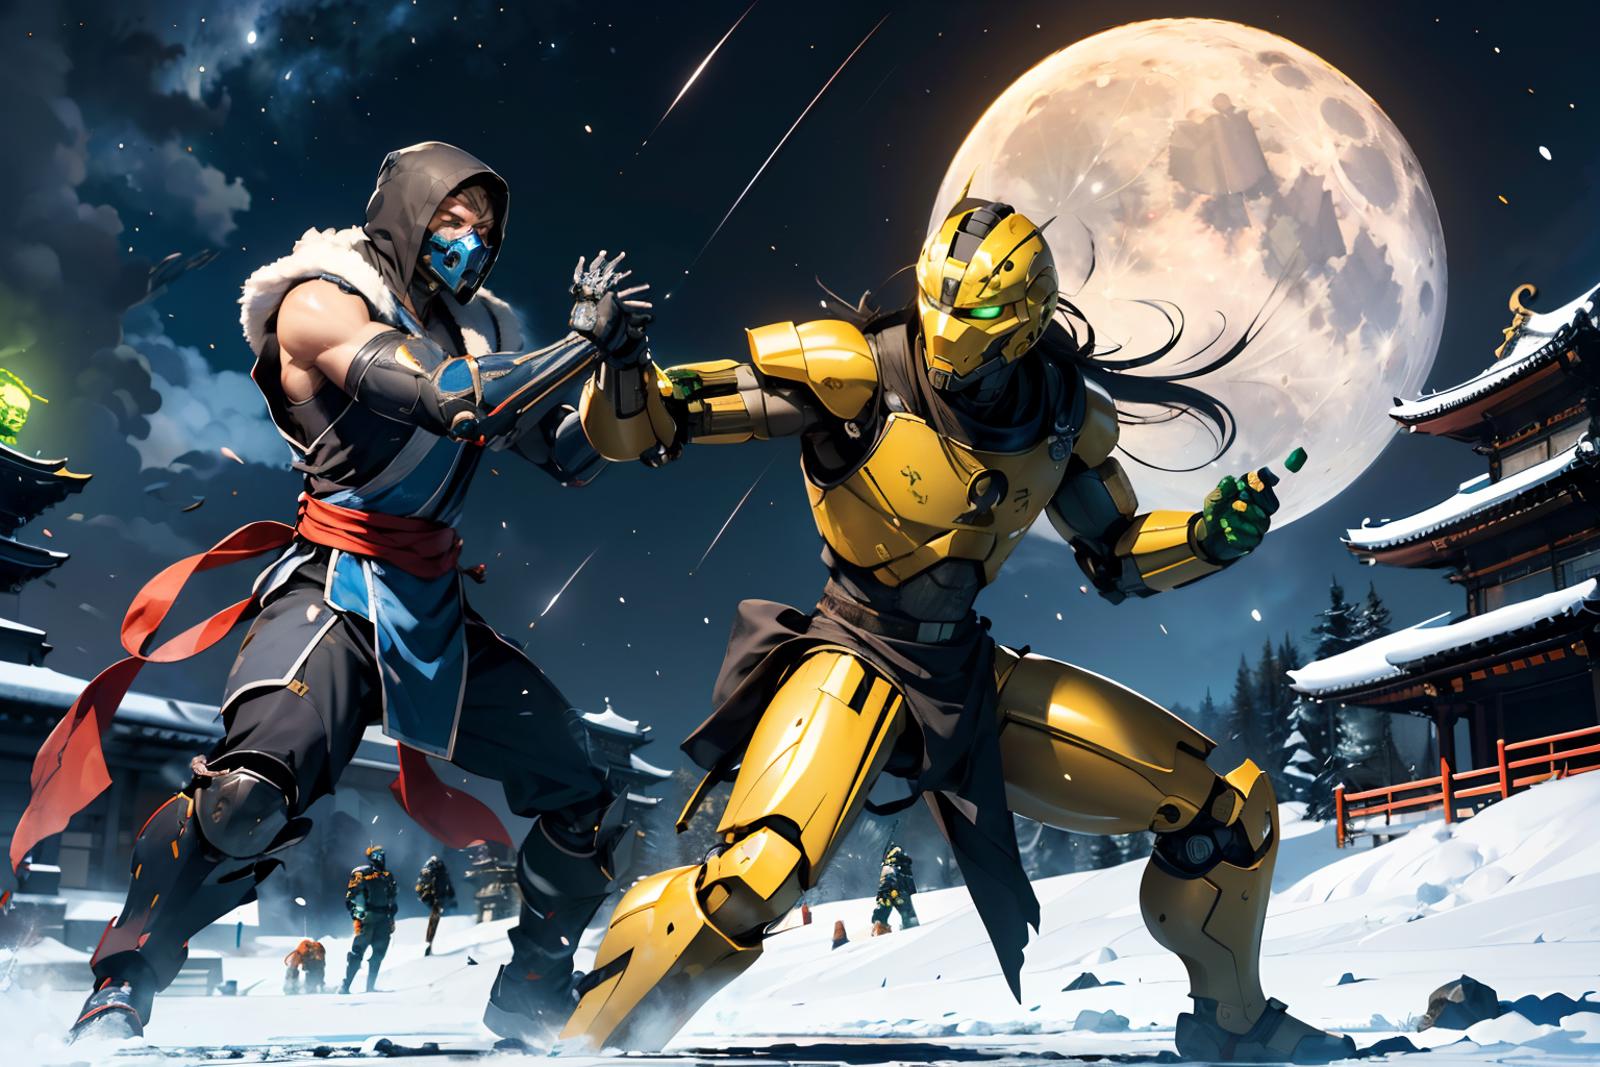 Cyrax (Mortal Kombat) image by wikkitikki